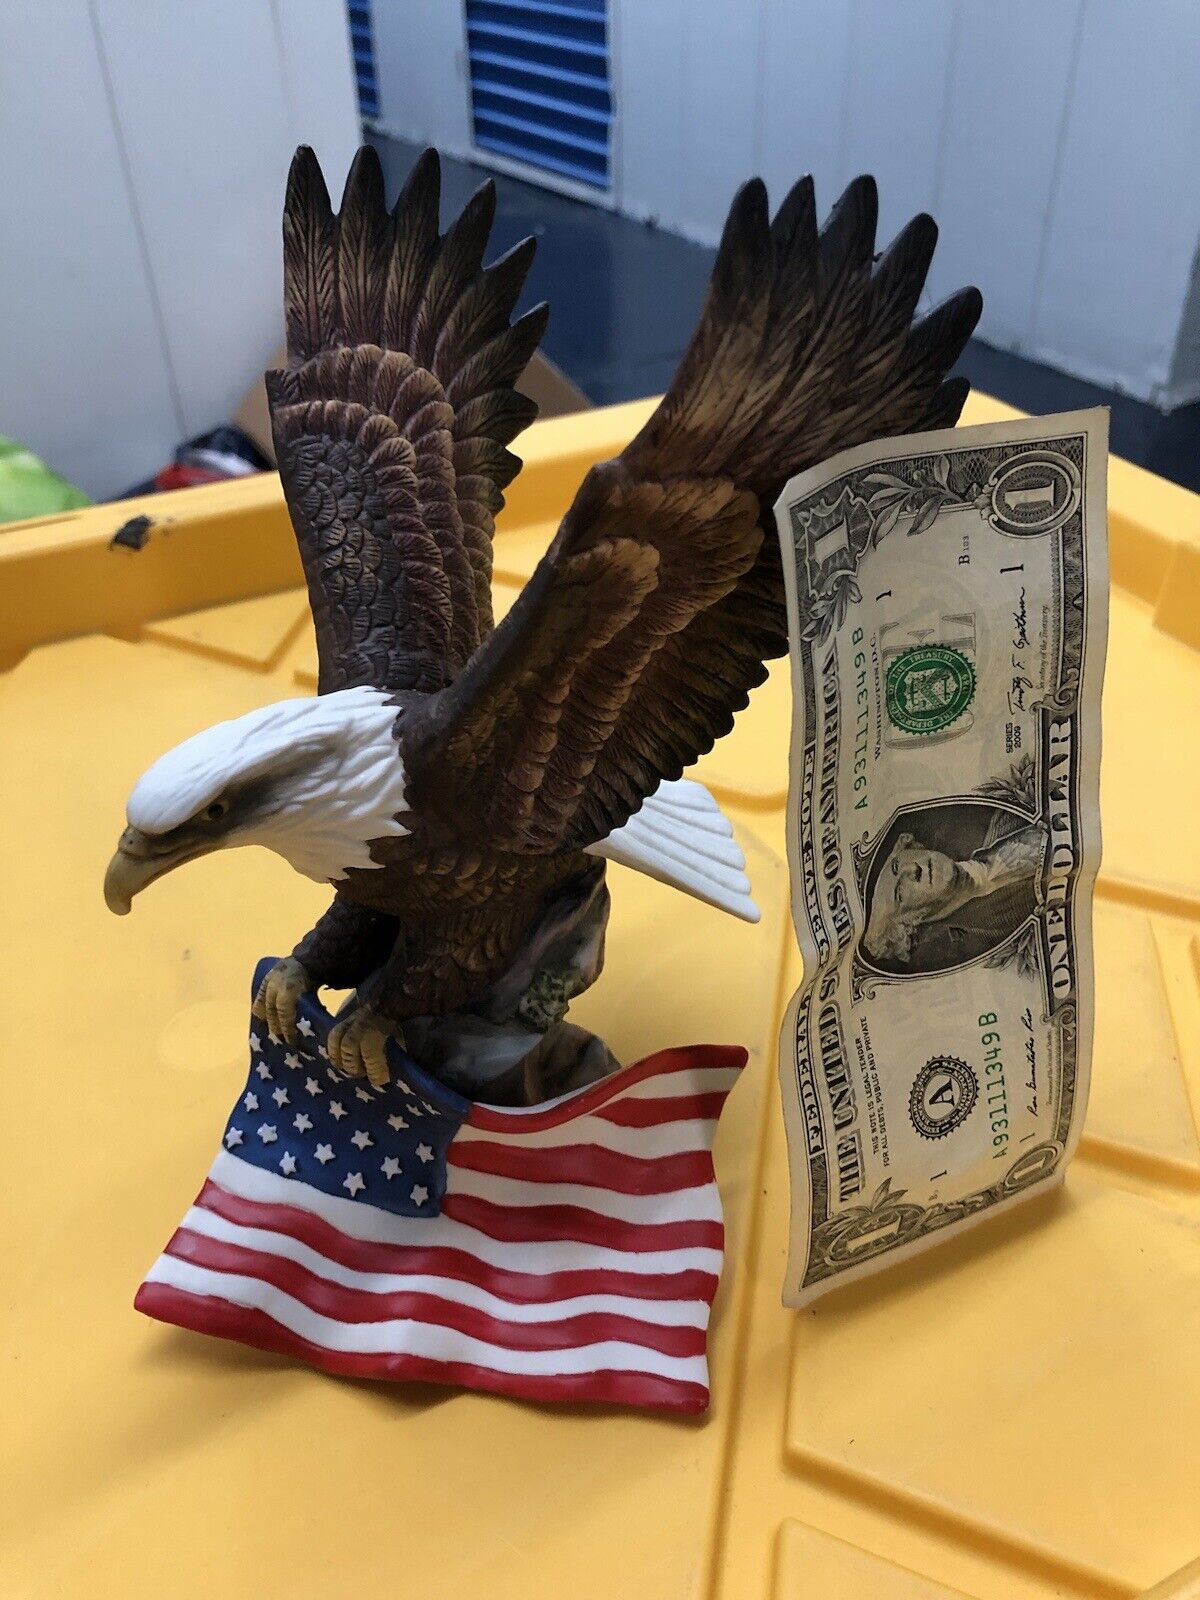 Wildlife American Pride Bald Eagle USA Flag Figurine Patriot Statue Sculpture